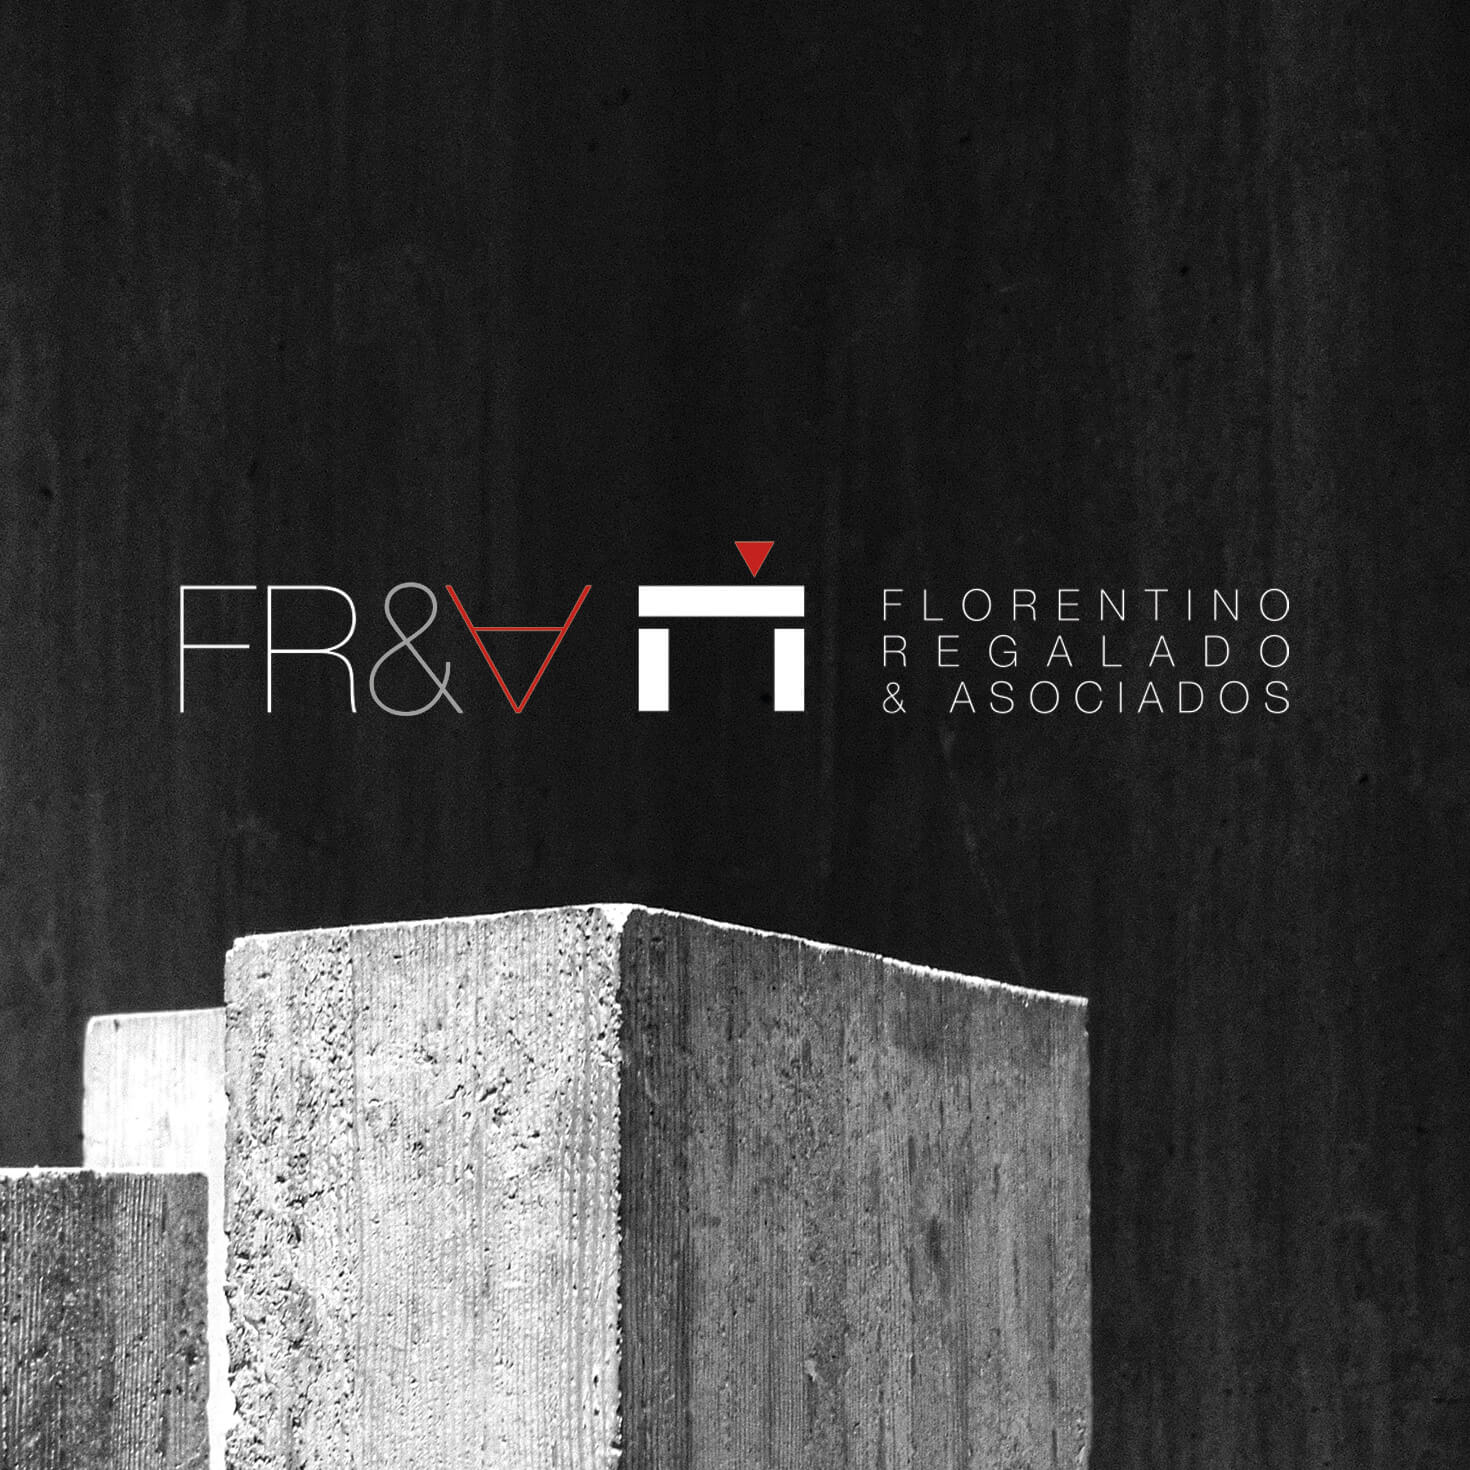 Florentino Regalado branding | Designed by MutuoEstudio